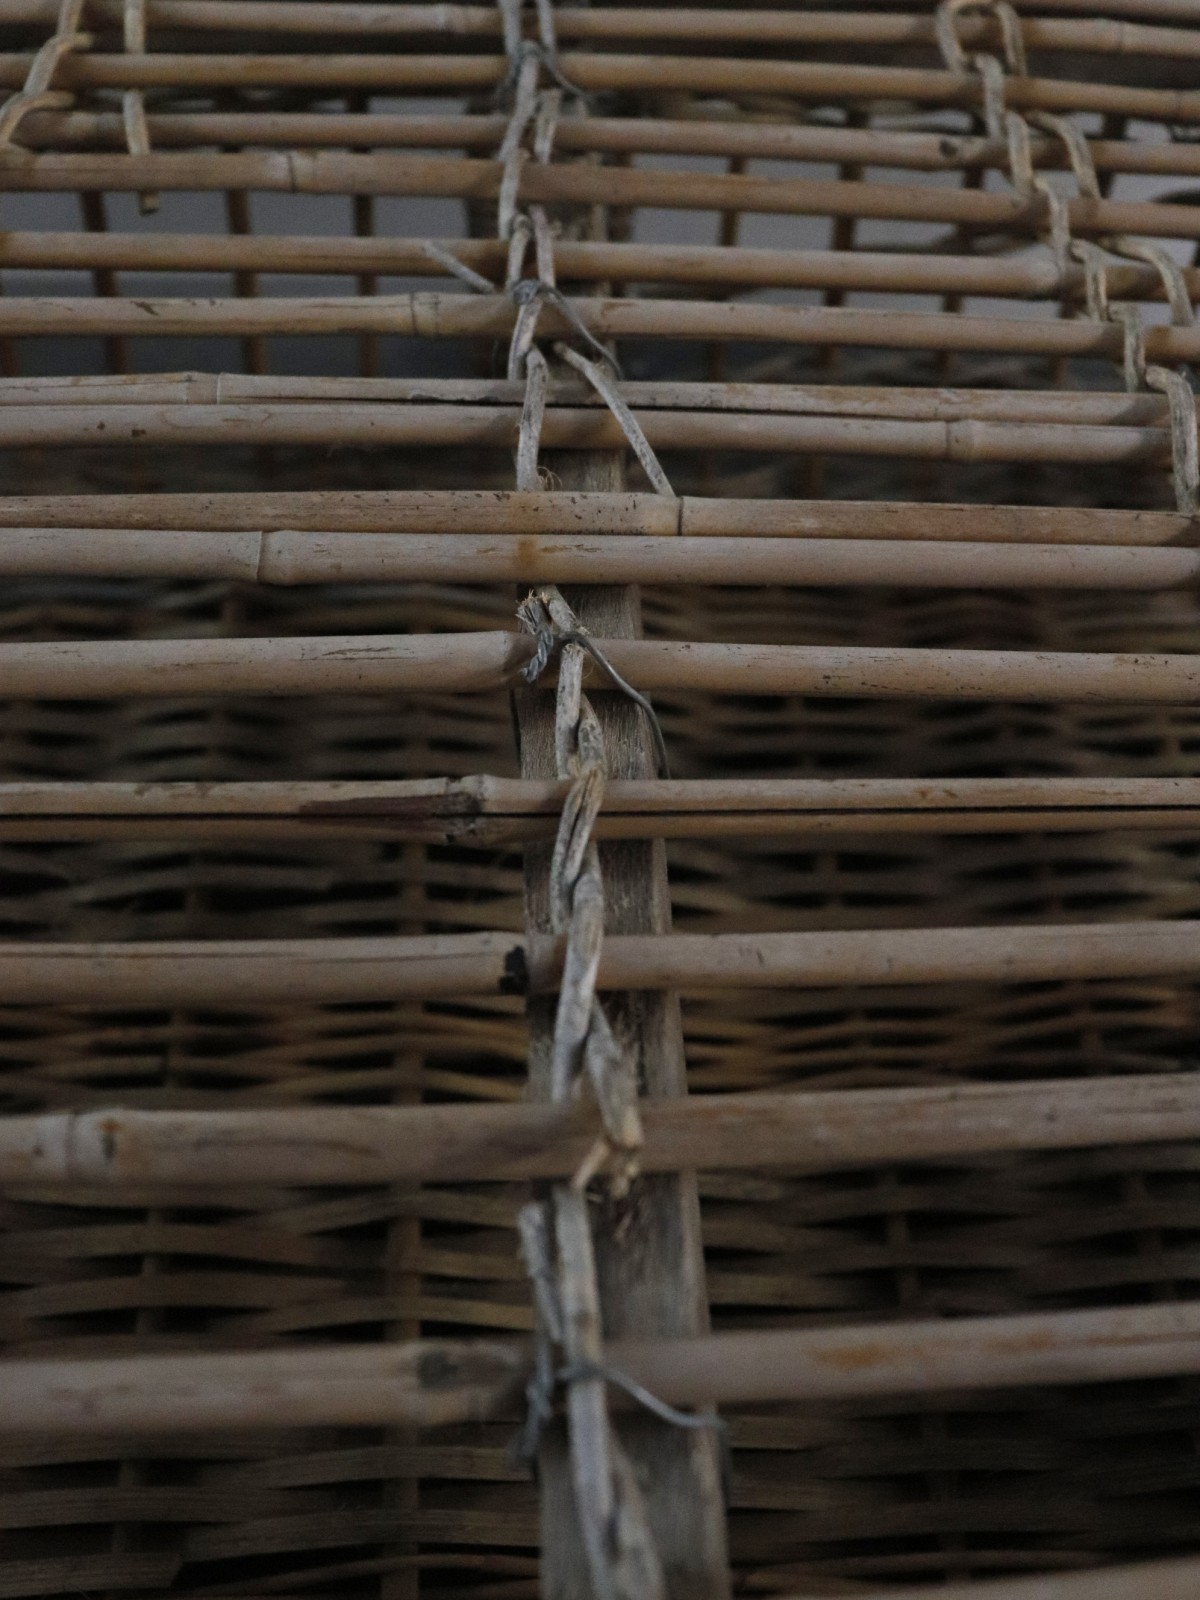 birdcage, wicker basket, netherlands